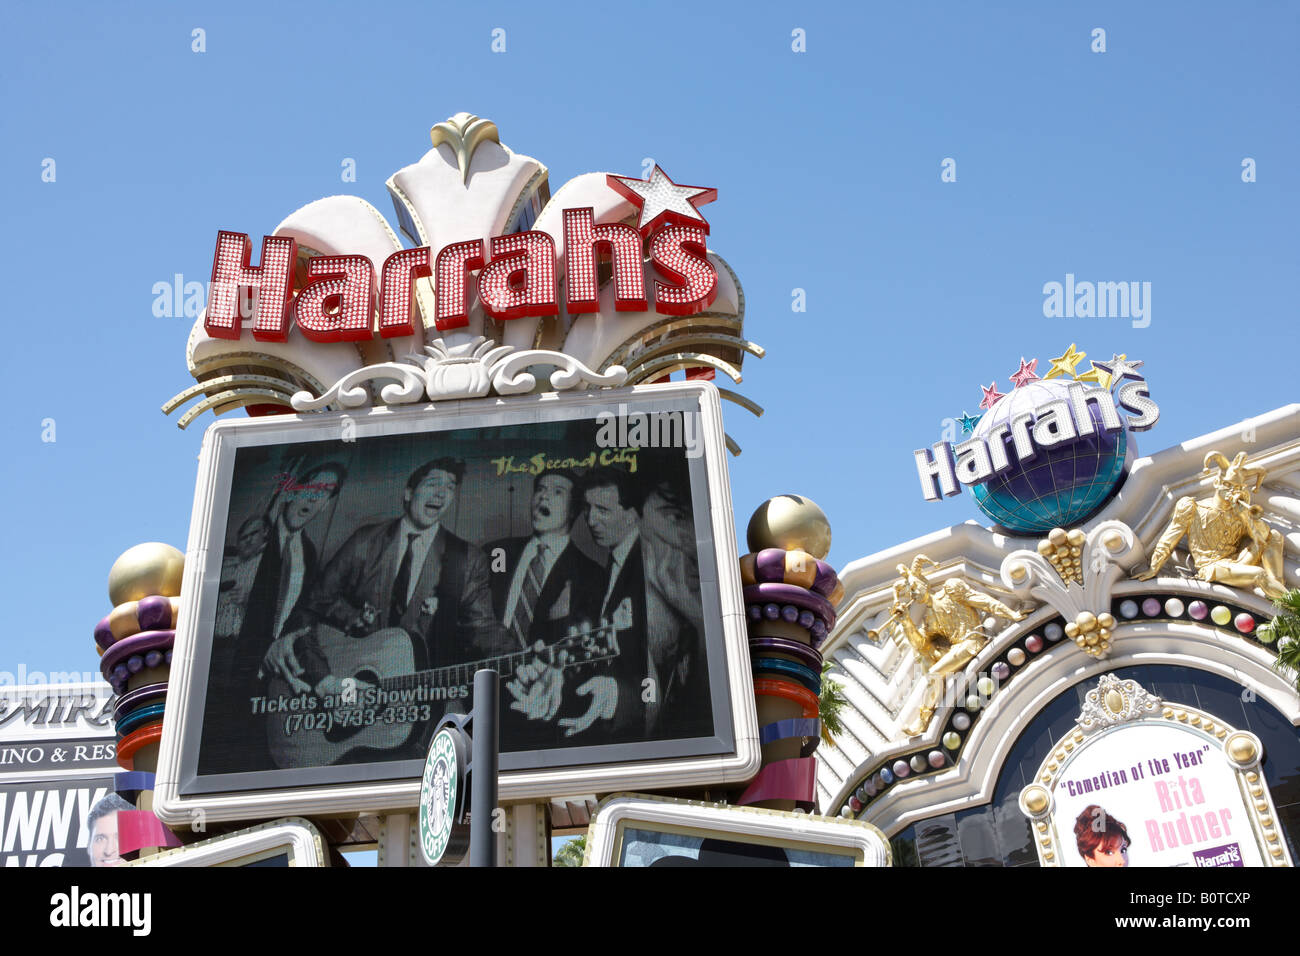 Harrahs Hotel Entrance Sign in Las Vegas Stock Photo